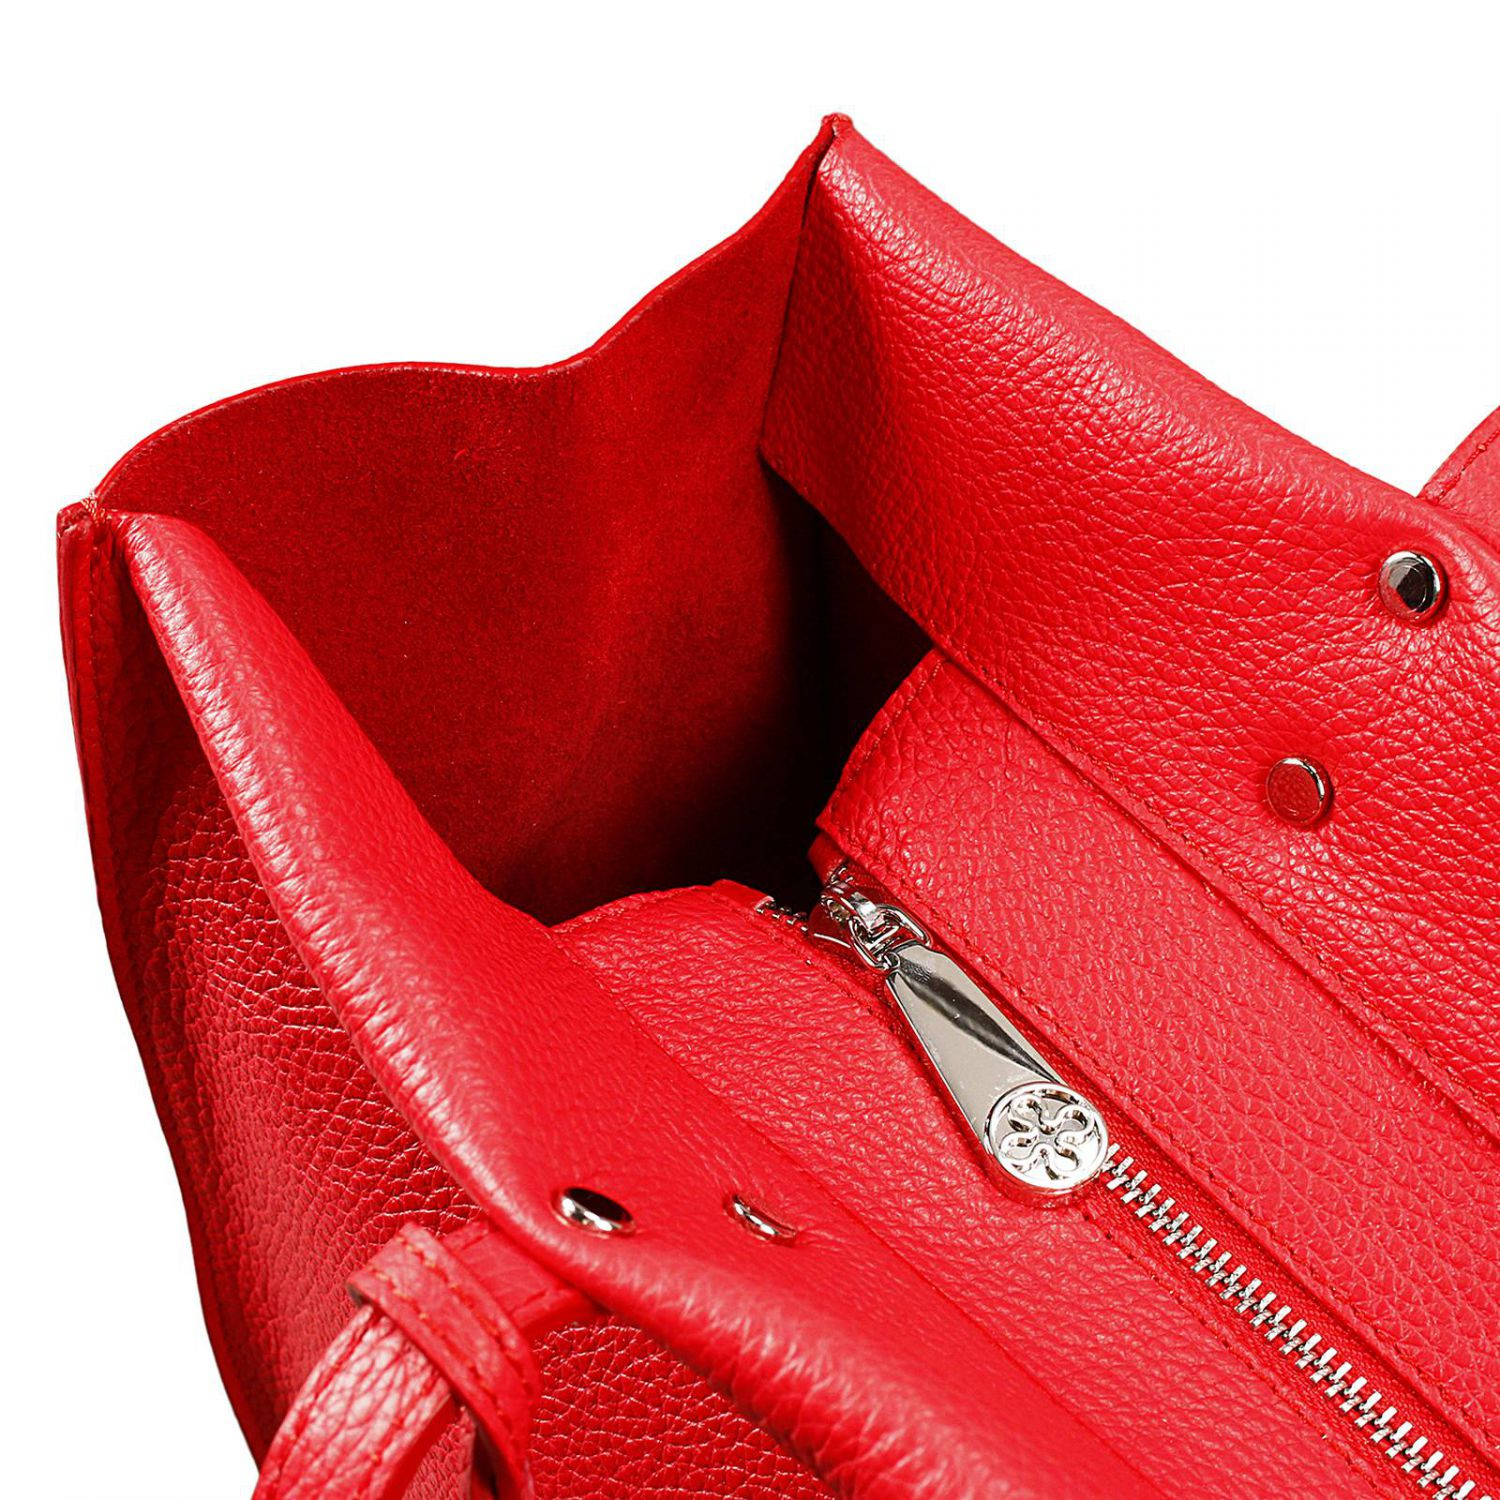 Lyst - V73 Handbag New Venezia Leather Shopping Bag in Red